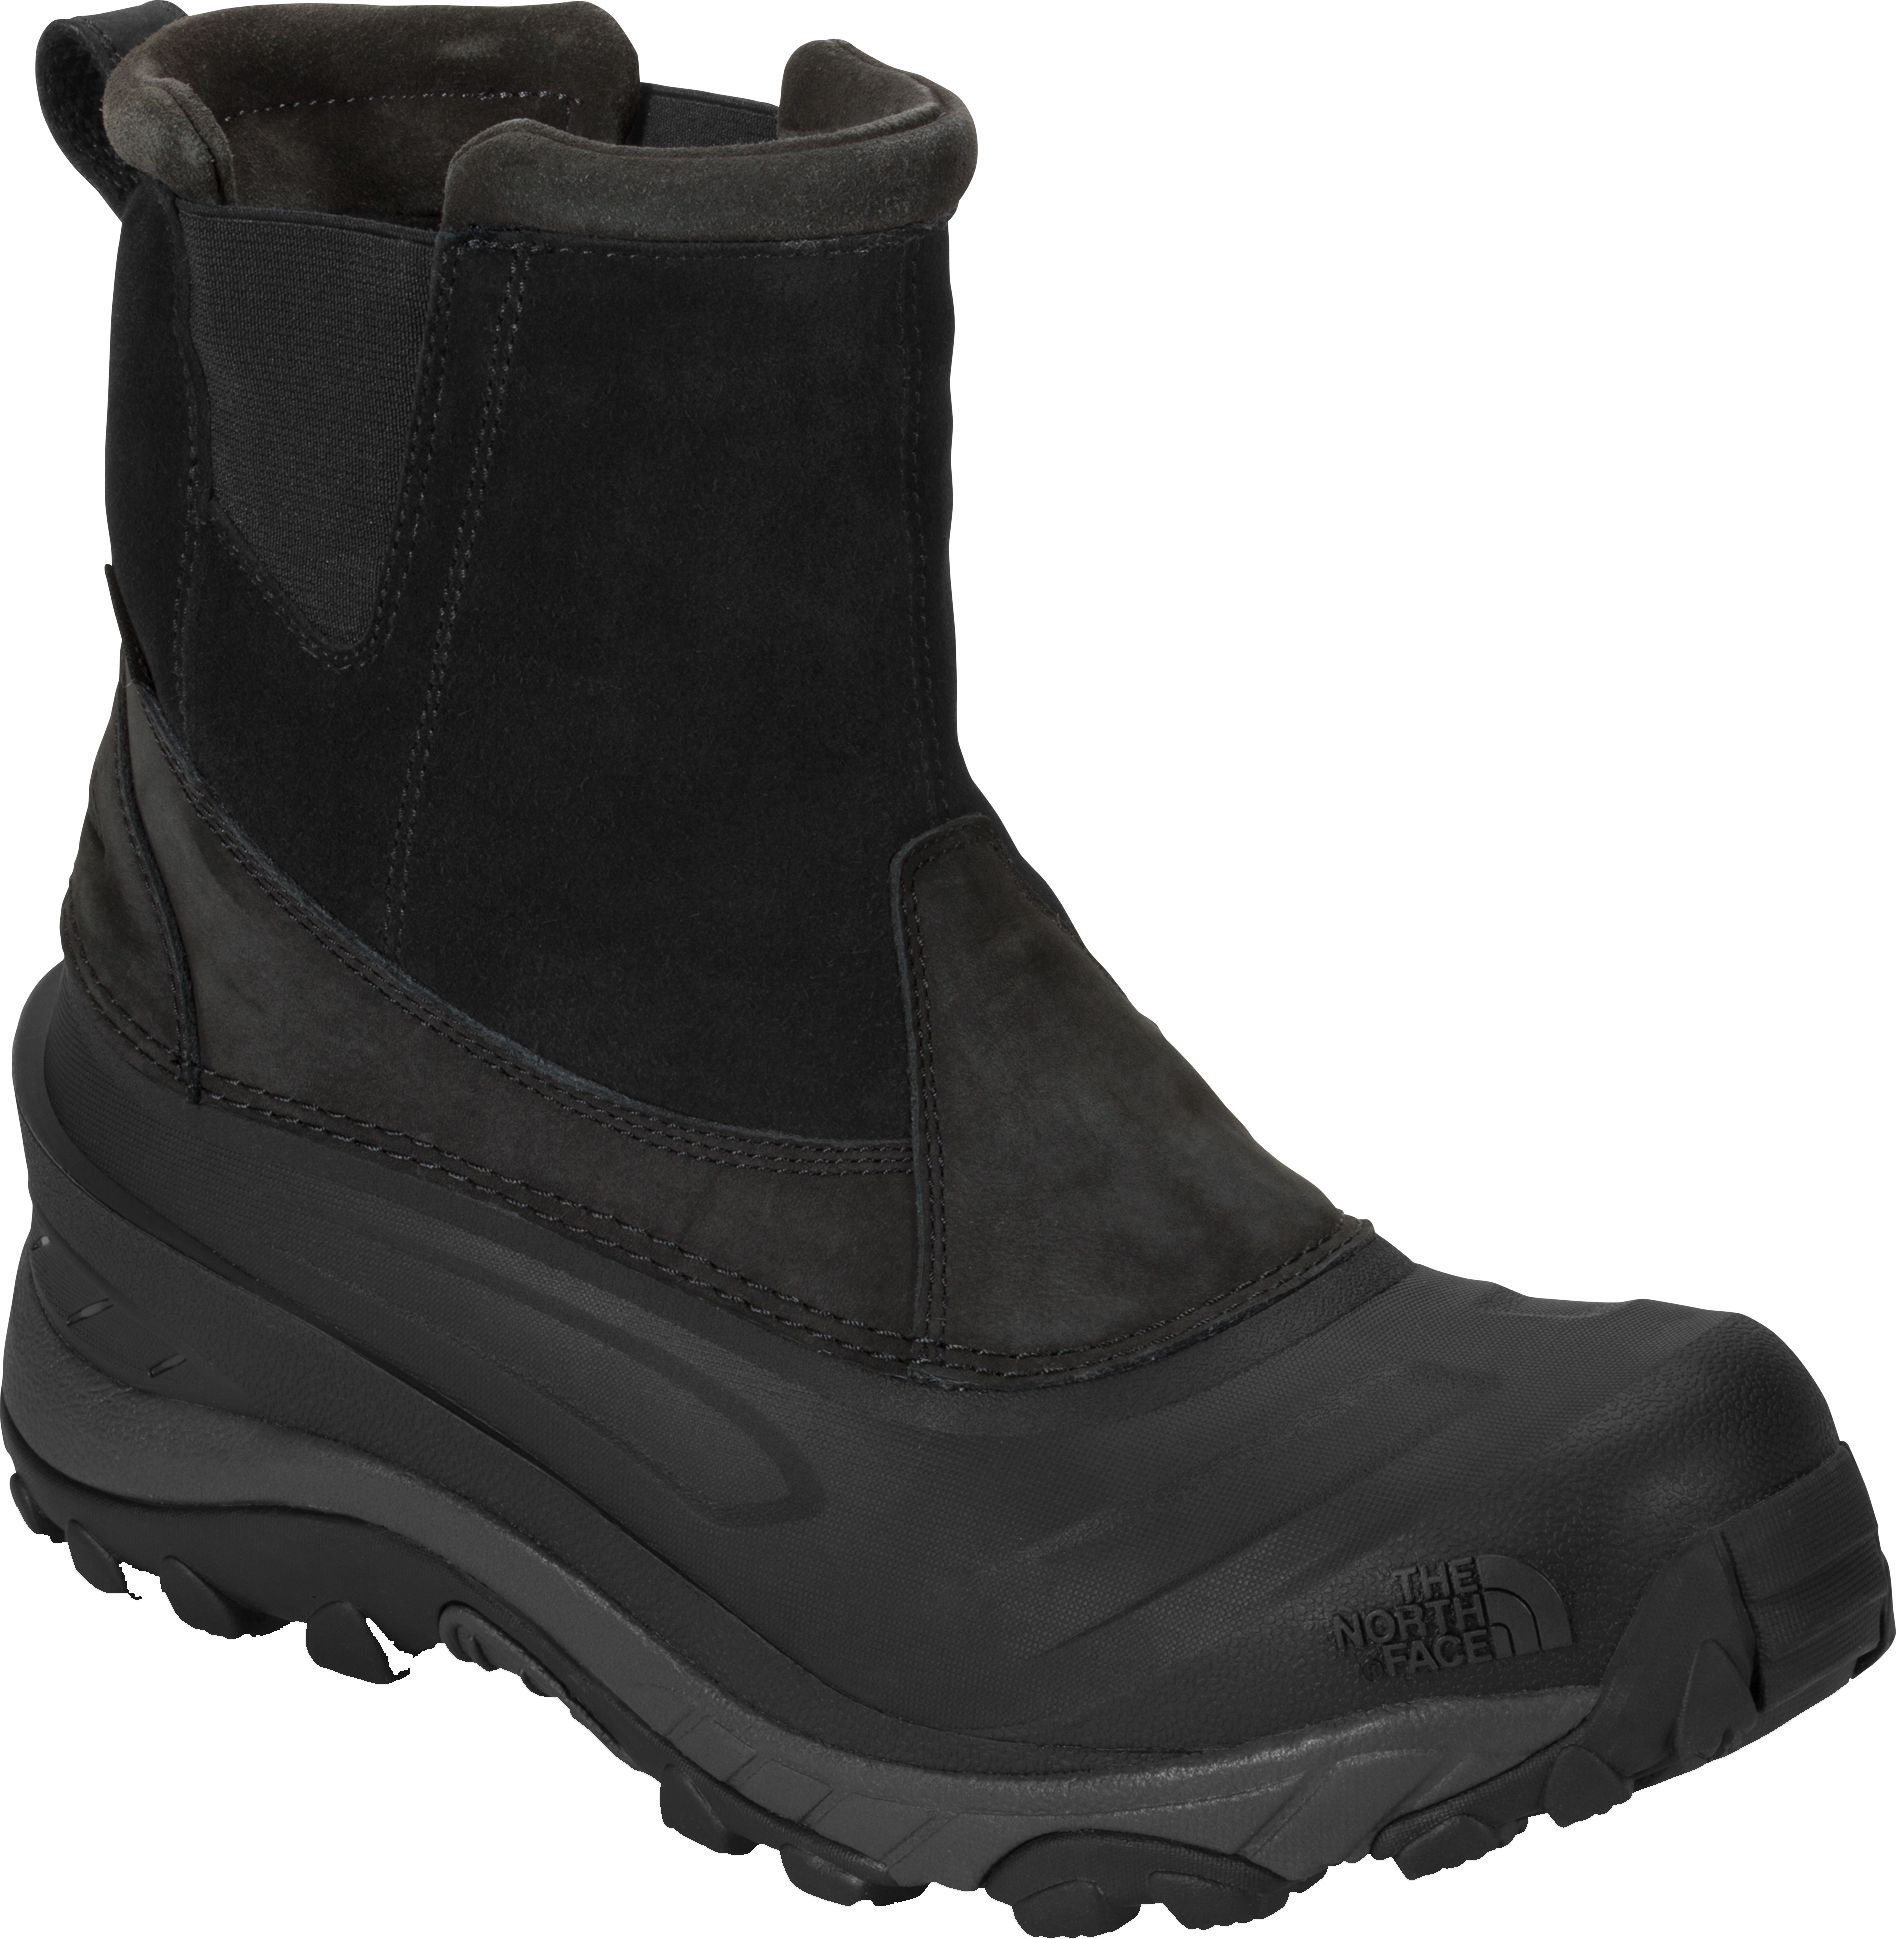 slip on winter work boots